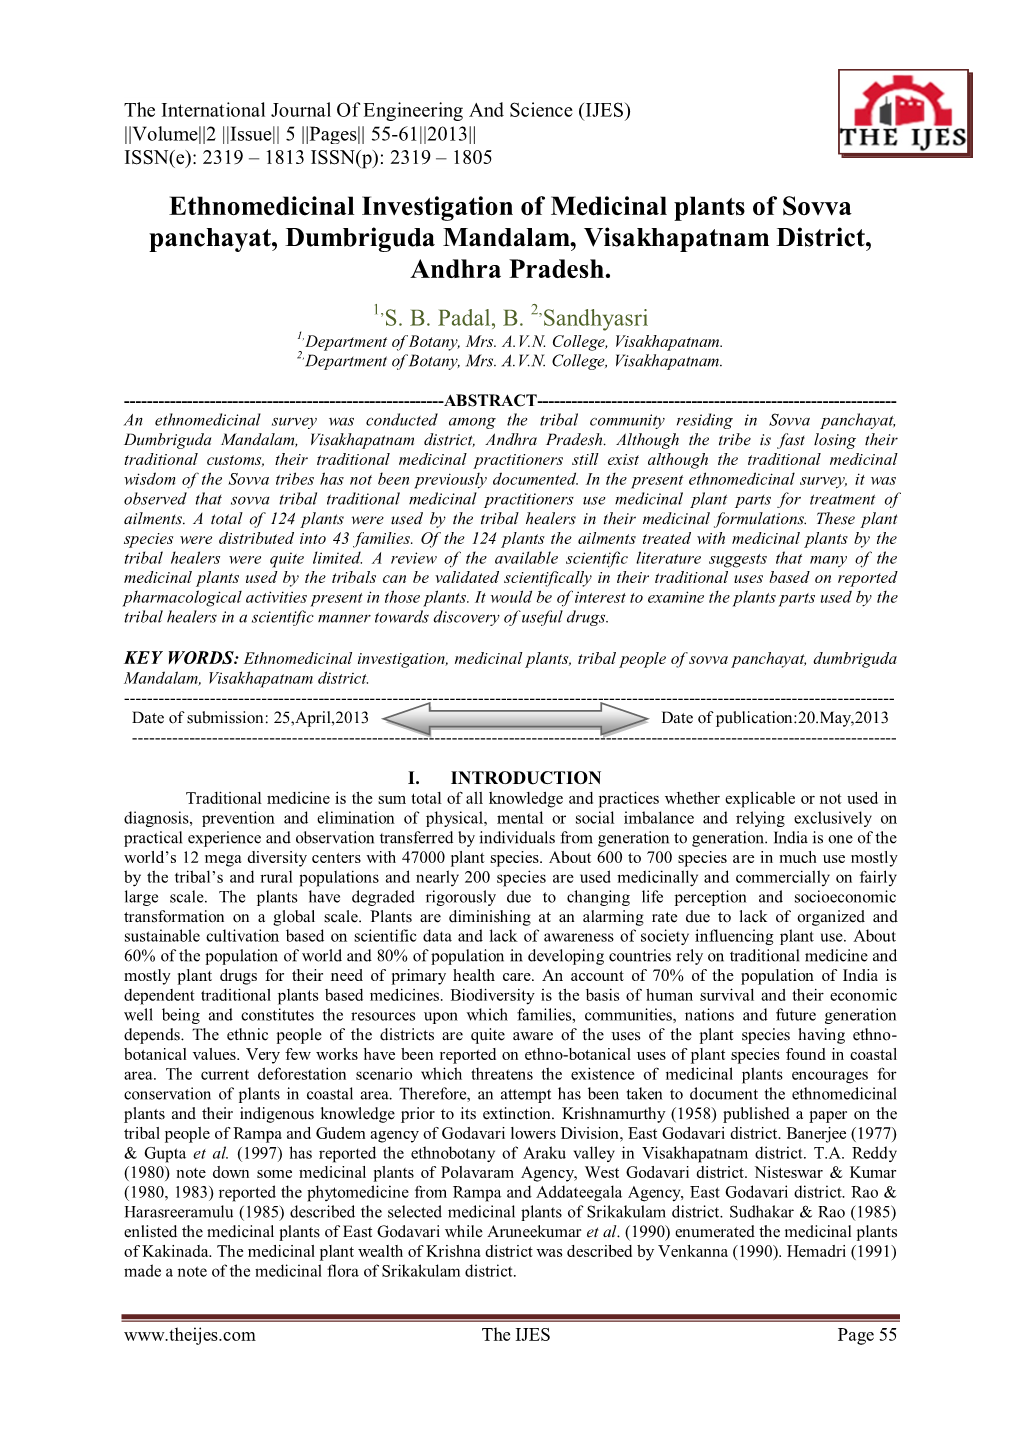 Ethnomedicinal Investigation of Medicinal Plants of Sovva Panchayat, Dumbriguda Mandalam, Visakhapatnam District, Andhra Pradesh